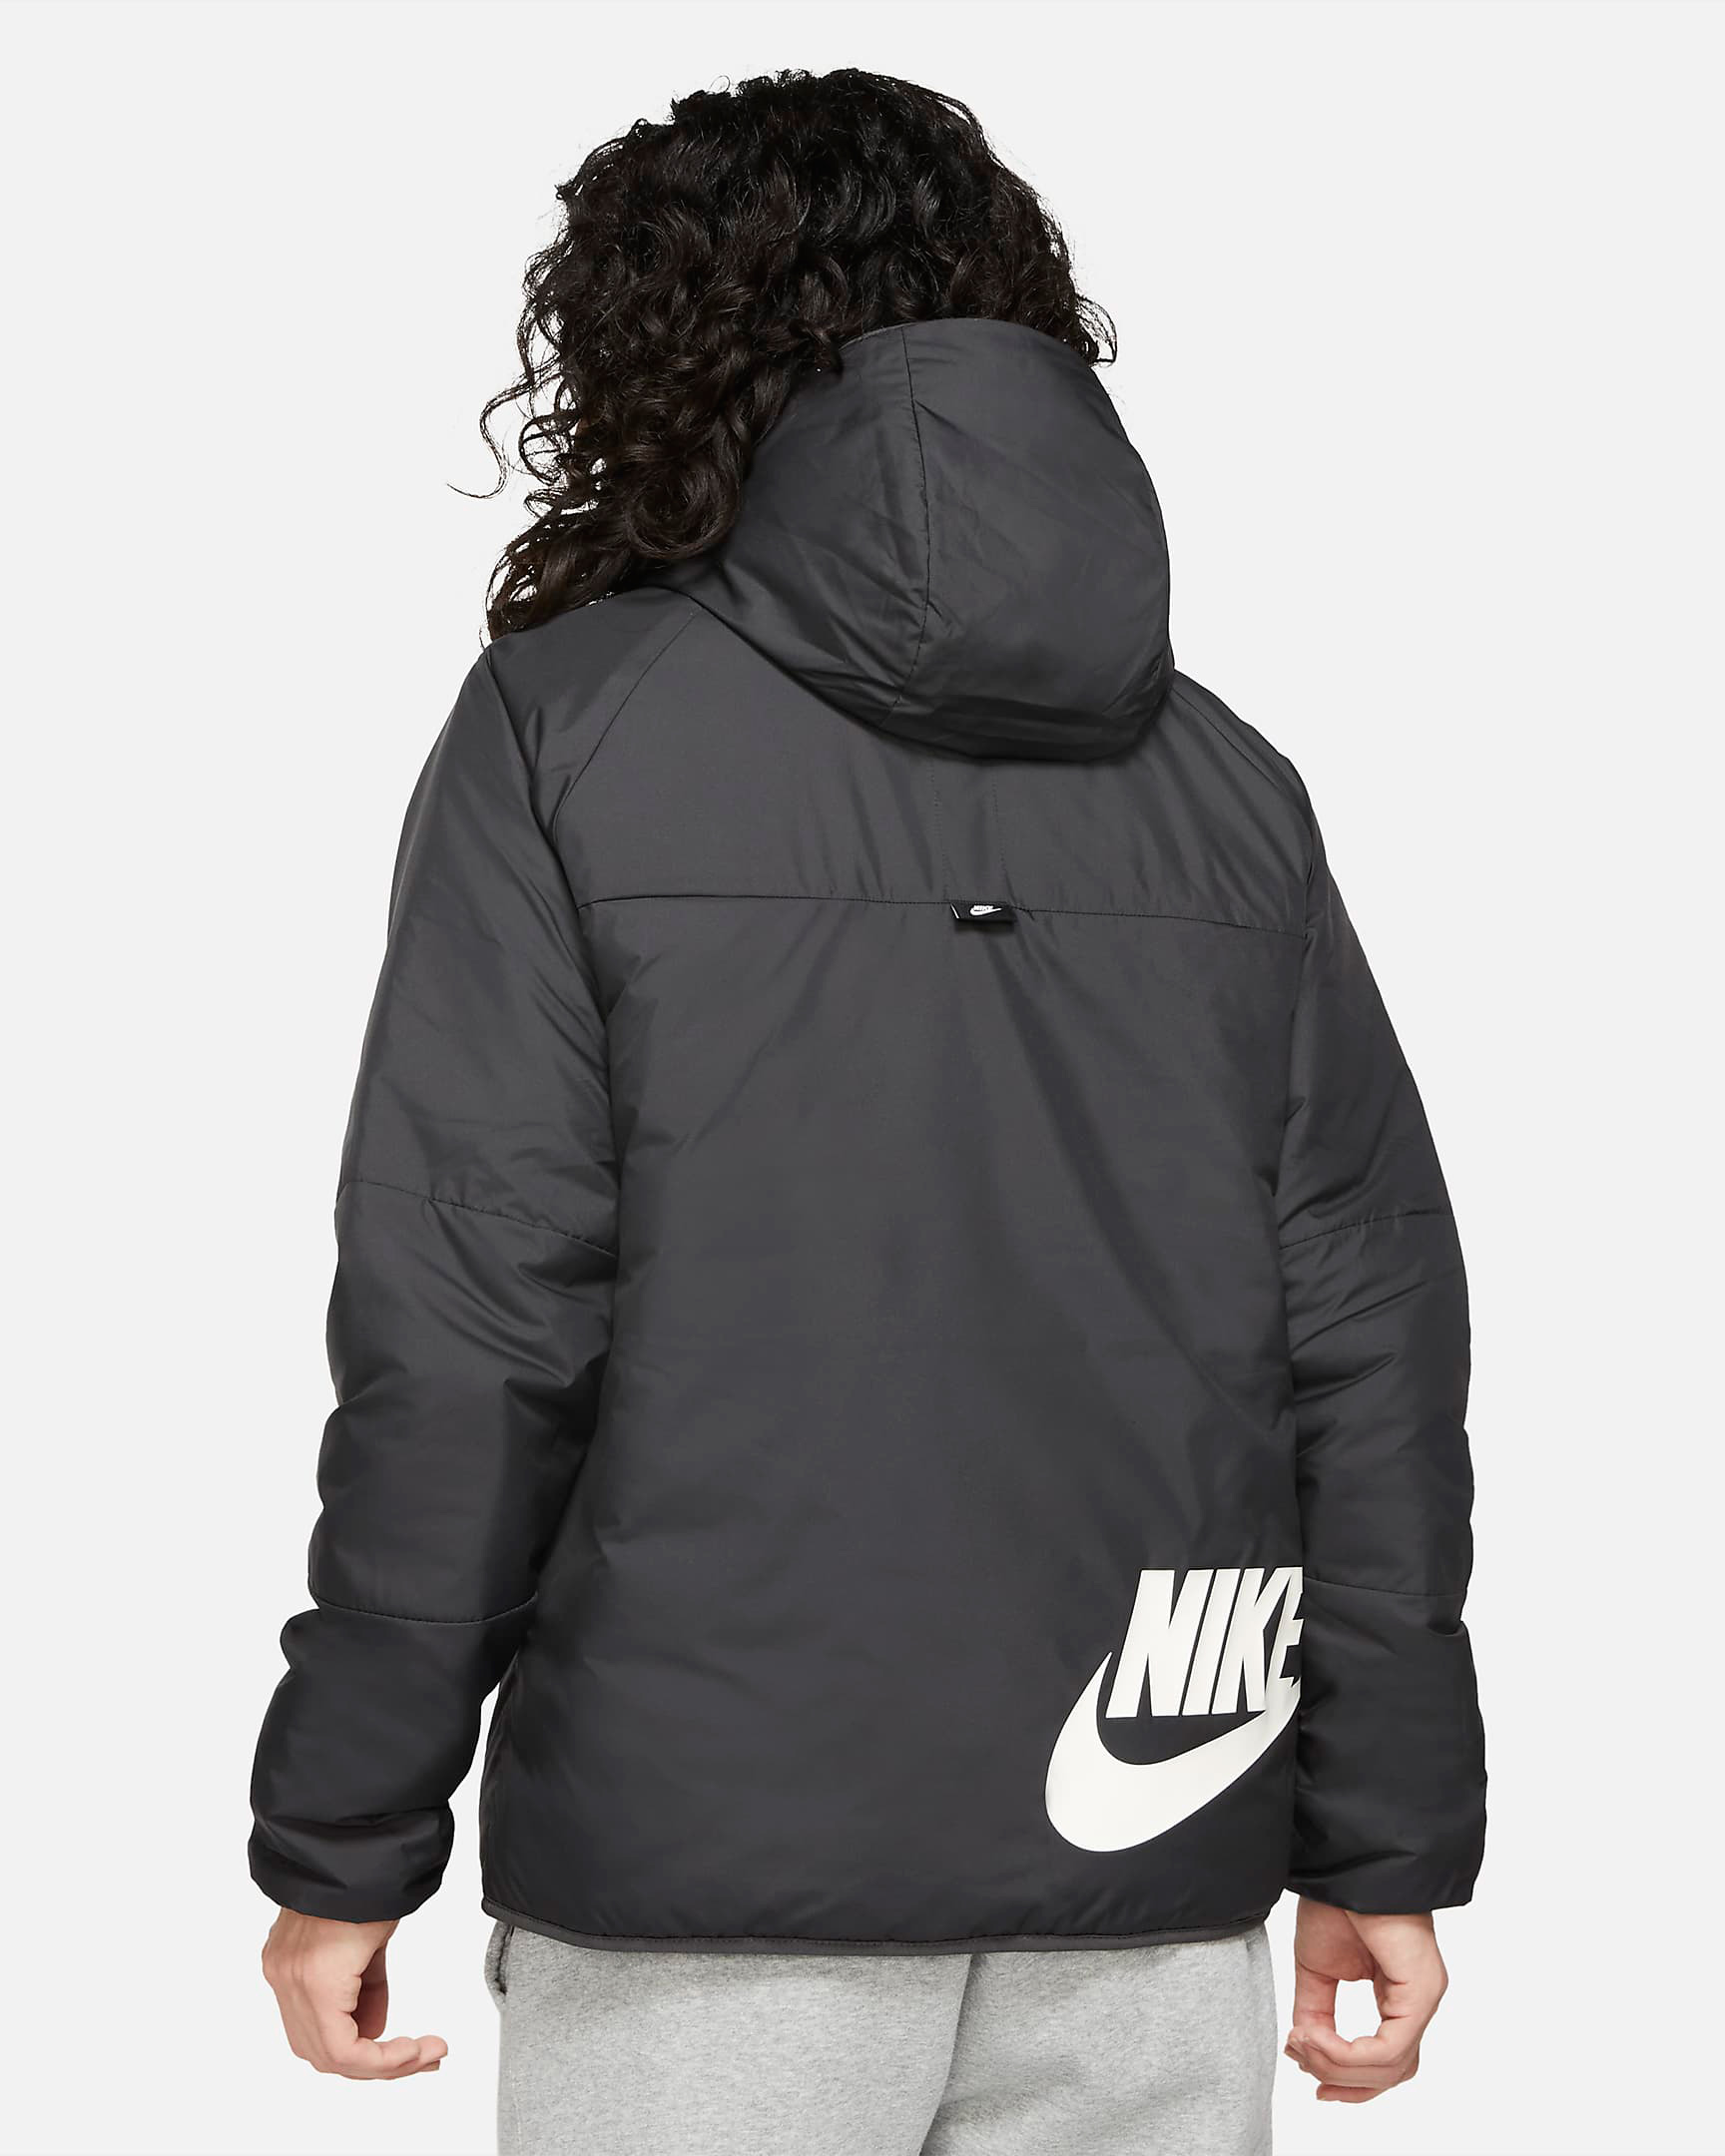 nike-sportswear-therma-fit-legacy-reversible-hooded-jacket-black-sail-2